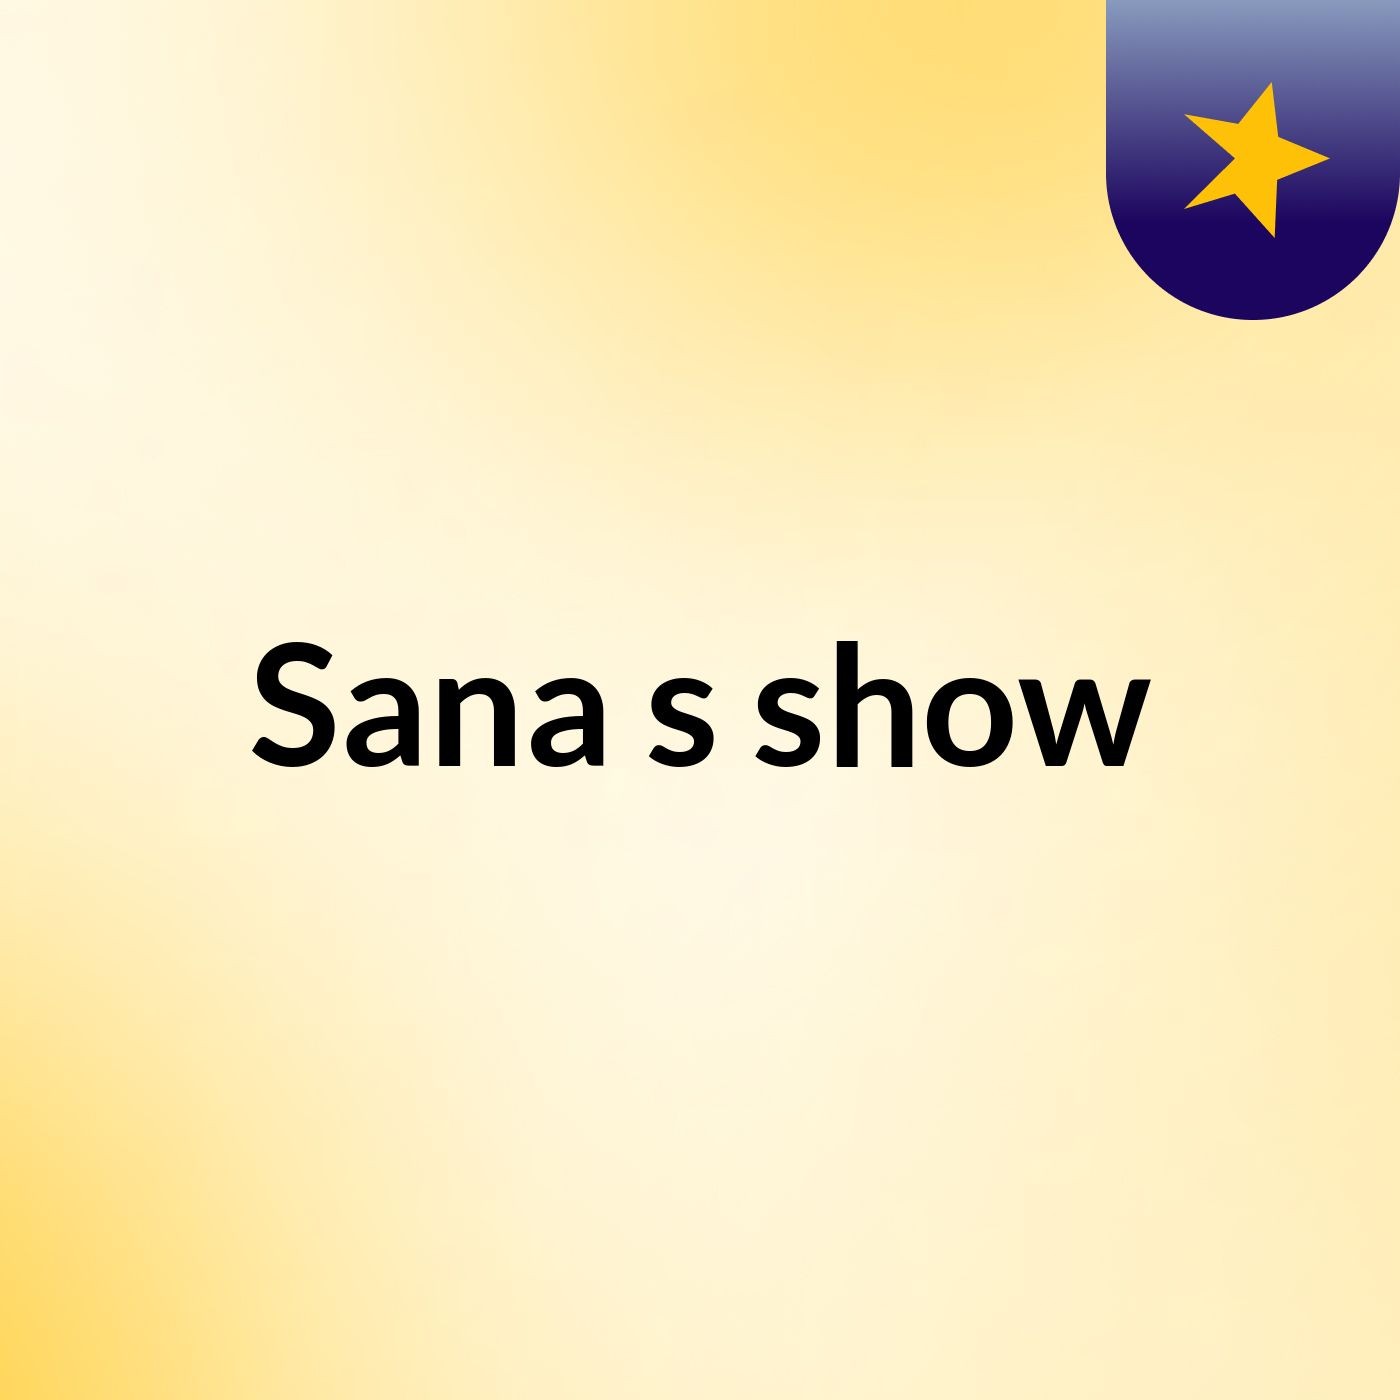 Sana's show